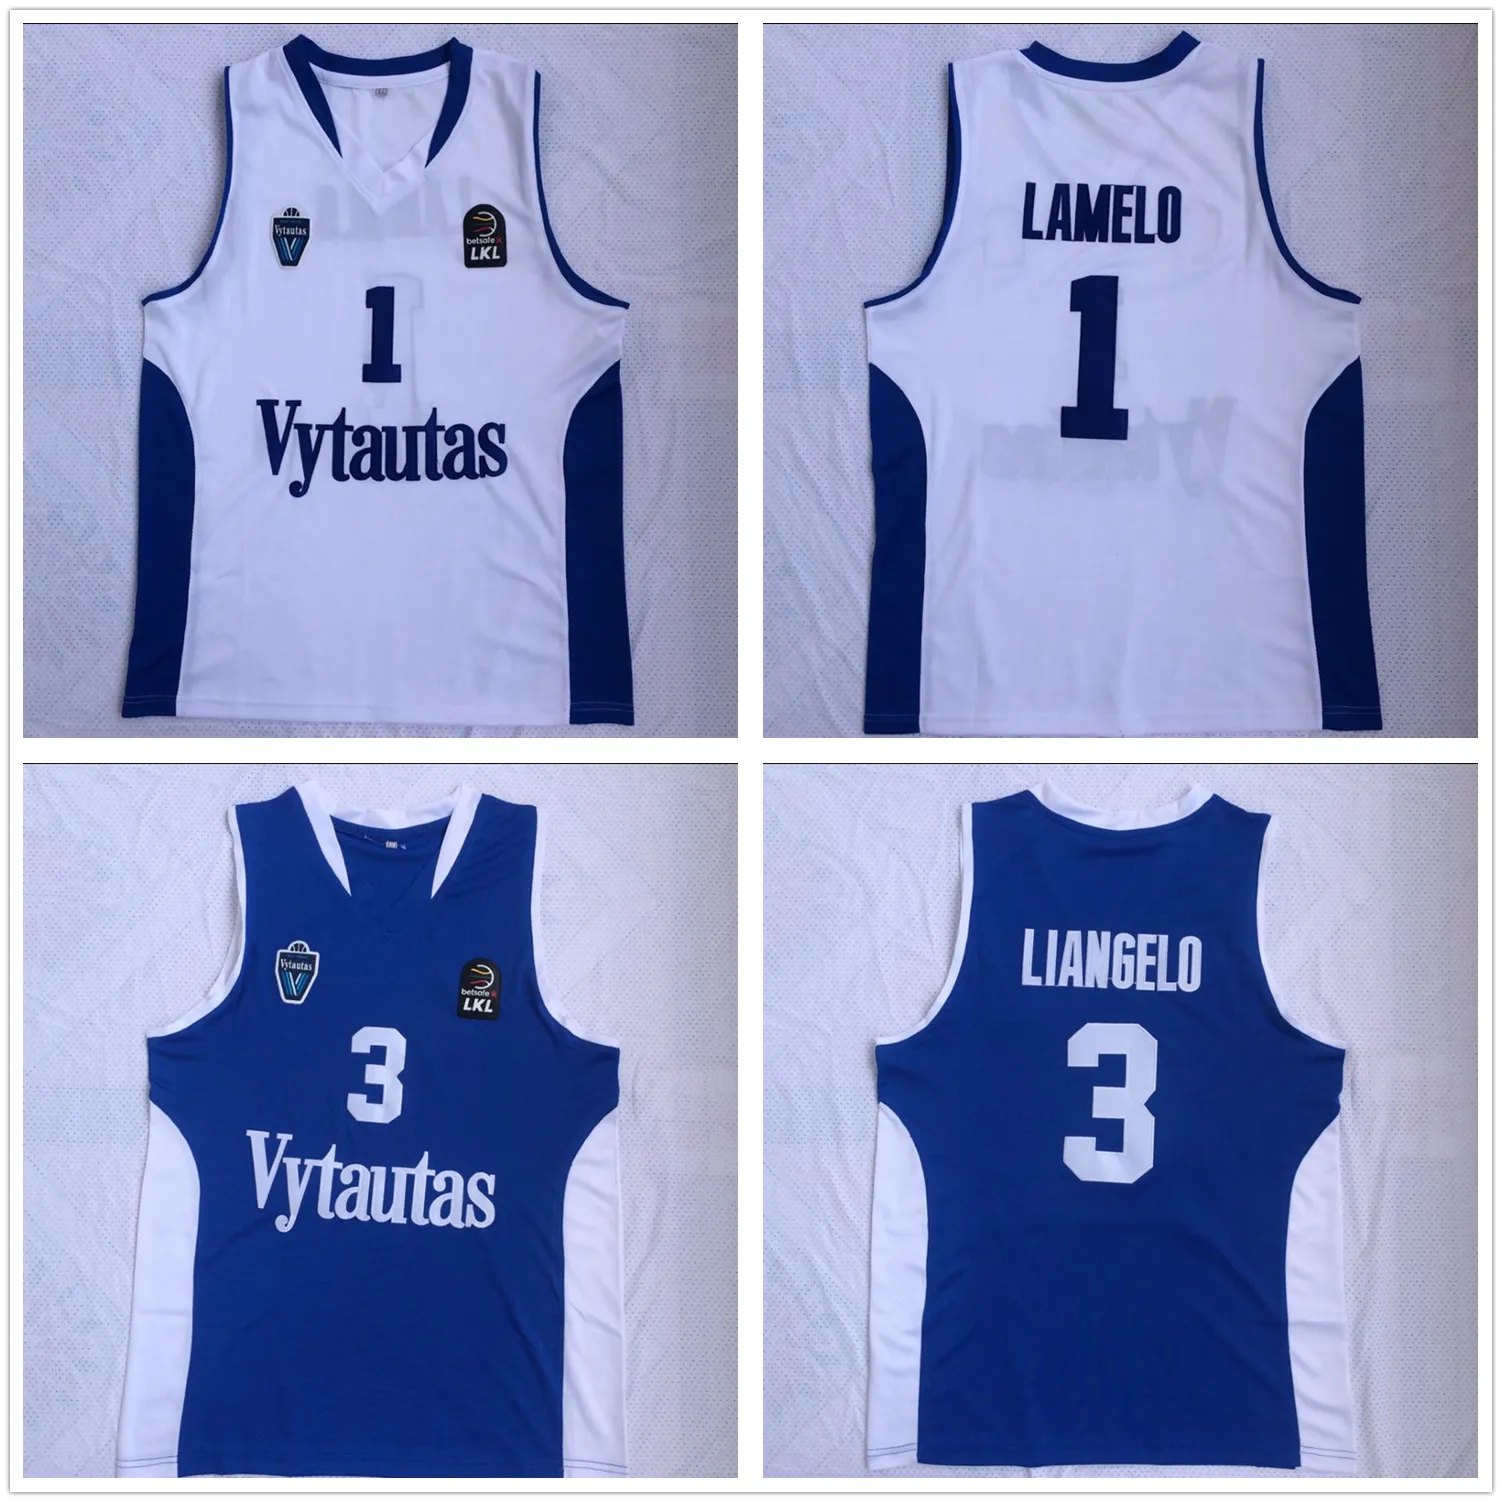 Basketbal jerseys NCAA Litouwen prienu Vytautas basketbal shirt 1 lamelo ball jersey 3 Liangelo uniform allemaal gestikt goed team blauw wit